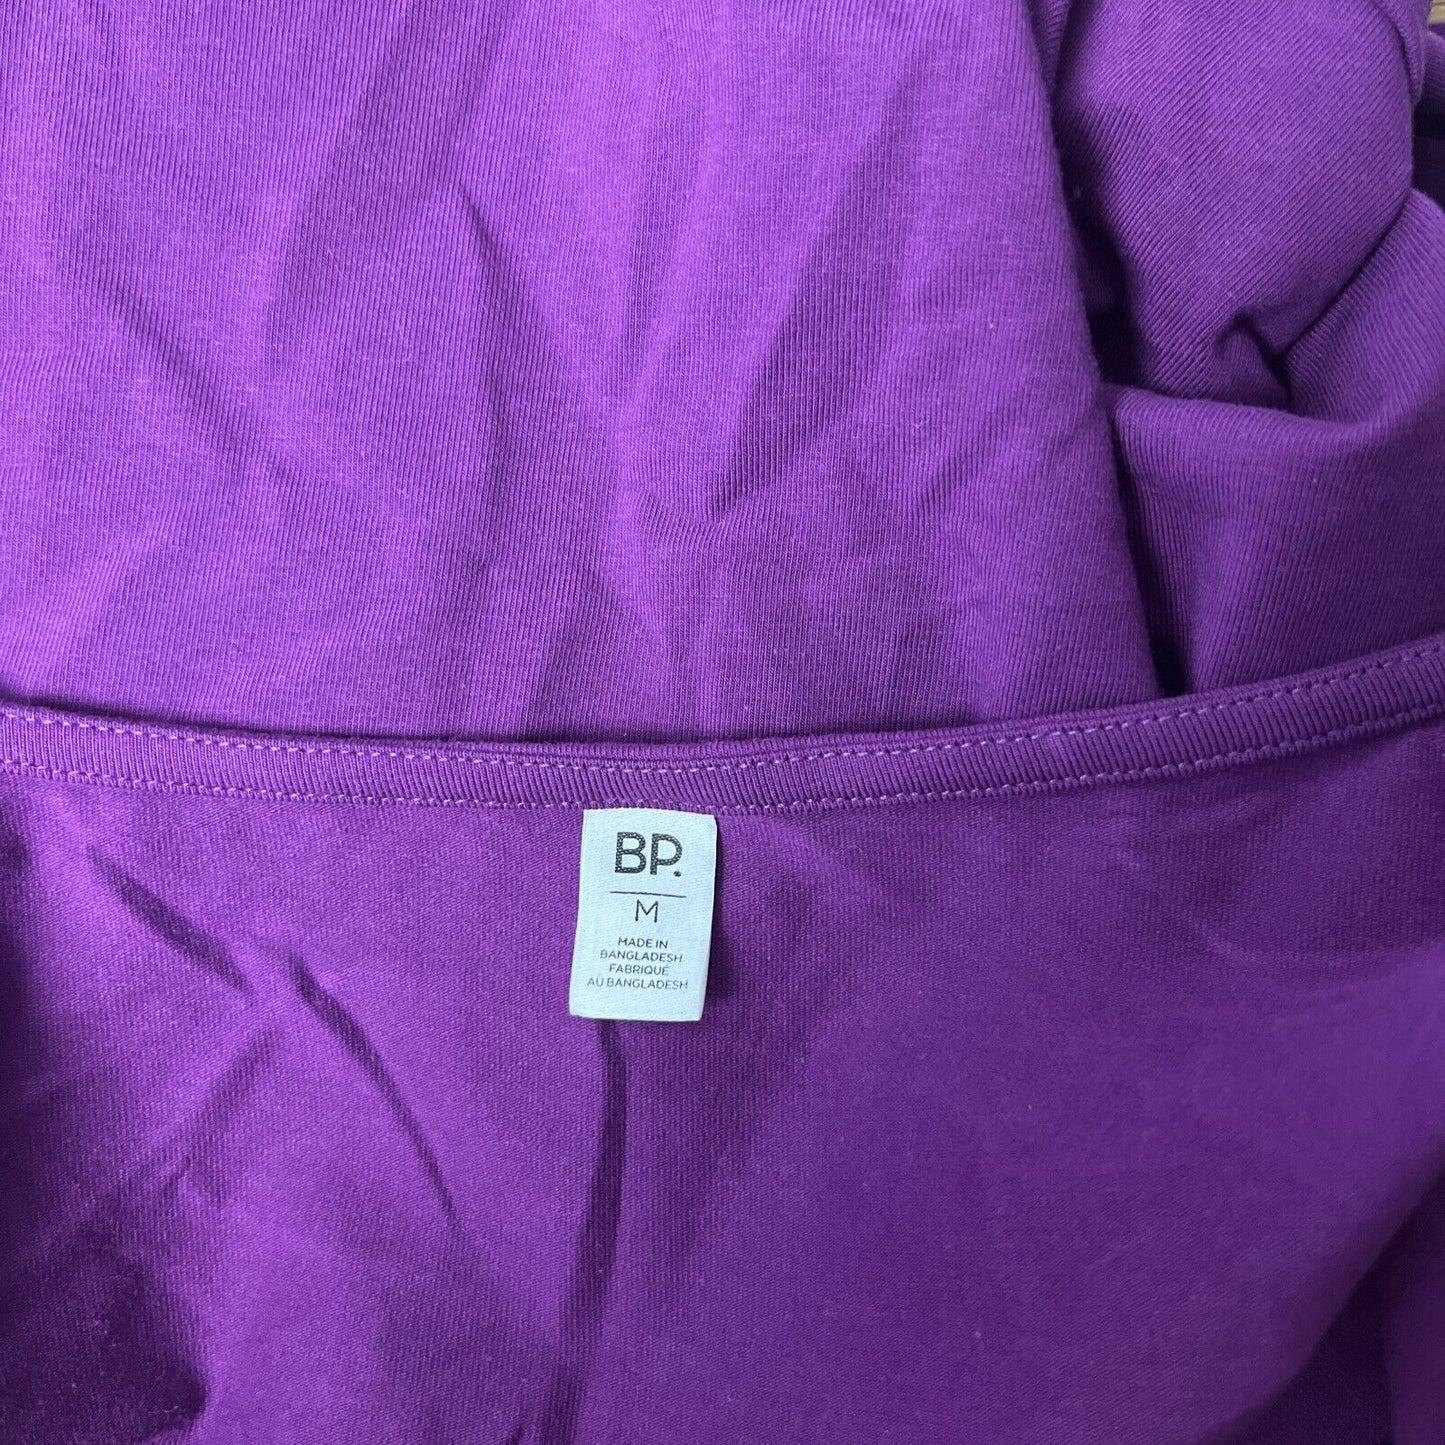 BP. Crop Long Sleeve Scoop Neck T-Shirt in Purple Phlox, Size Medium